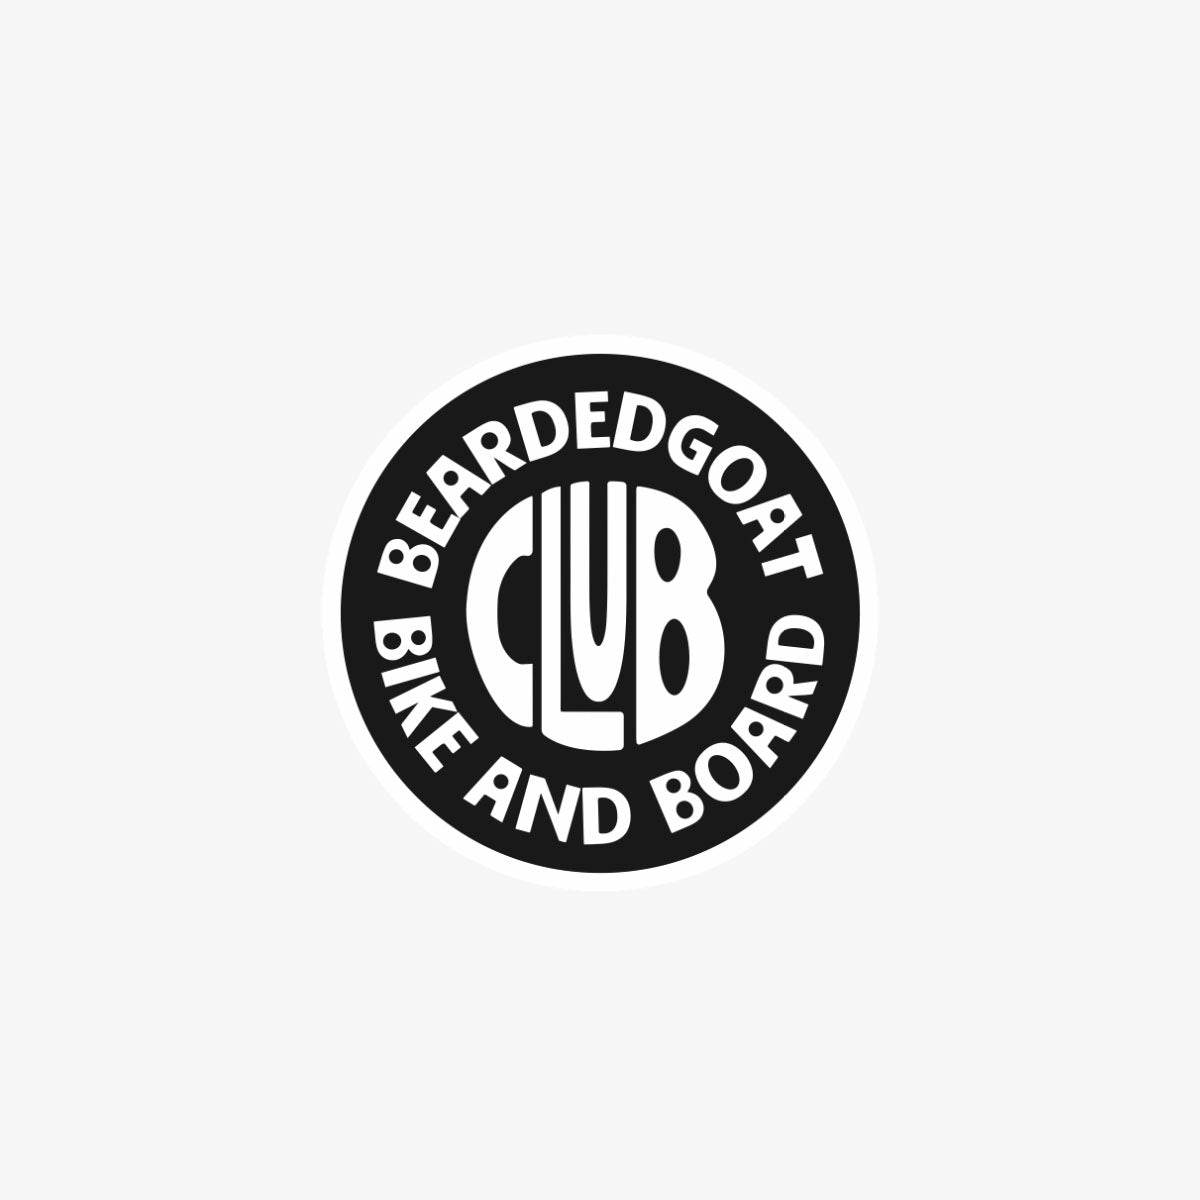 Bike + Board Club Sticker